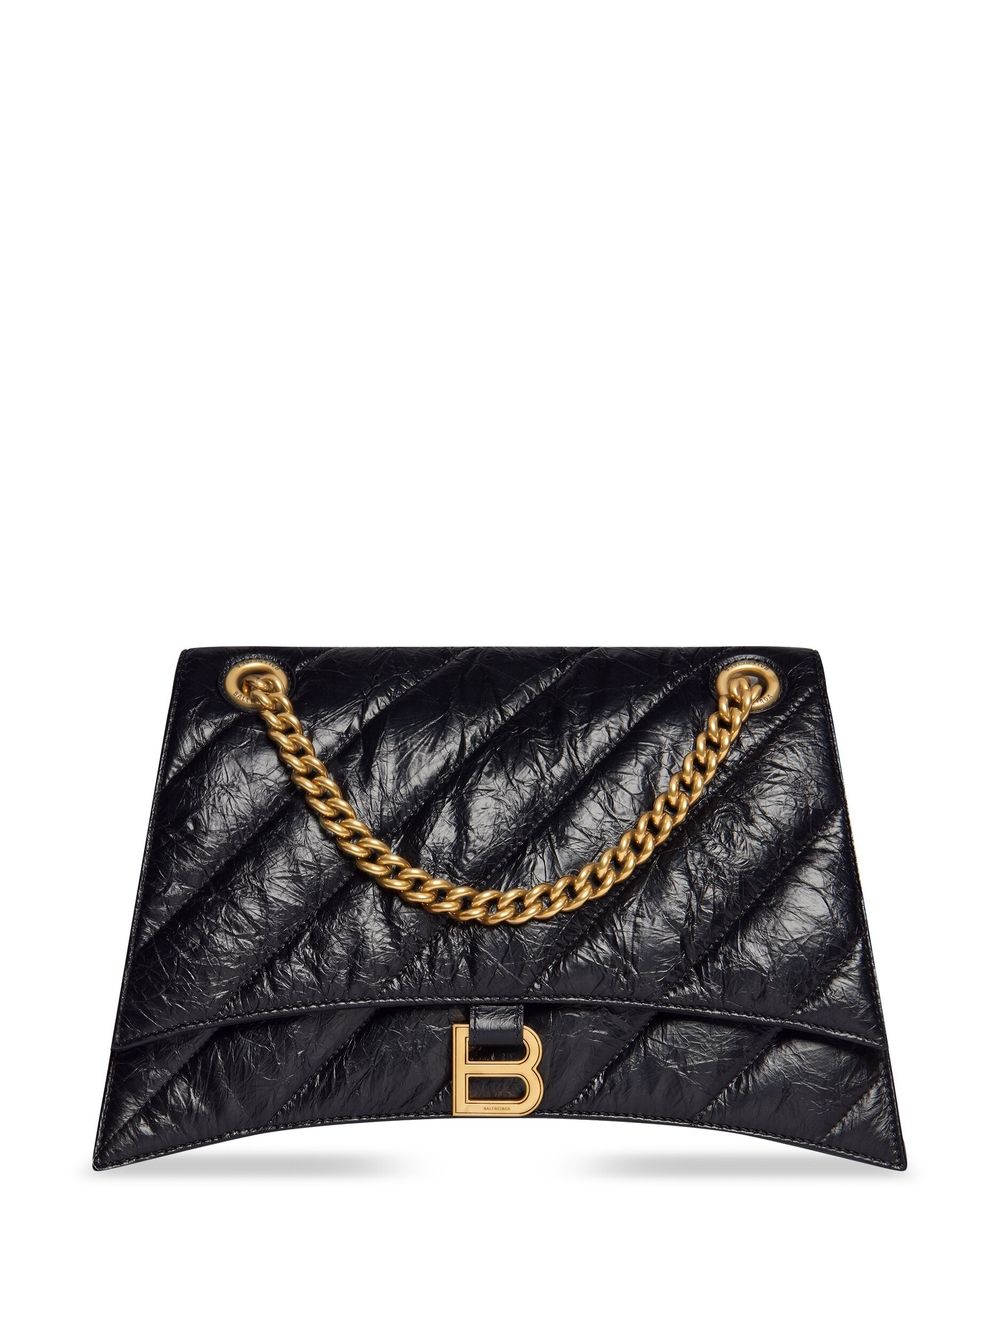 Balenciaga Crush Quilted Shoulder Bag In Black